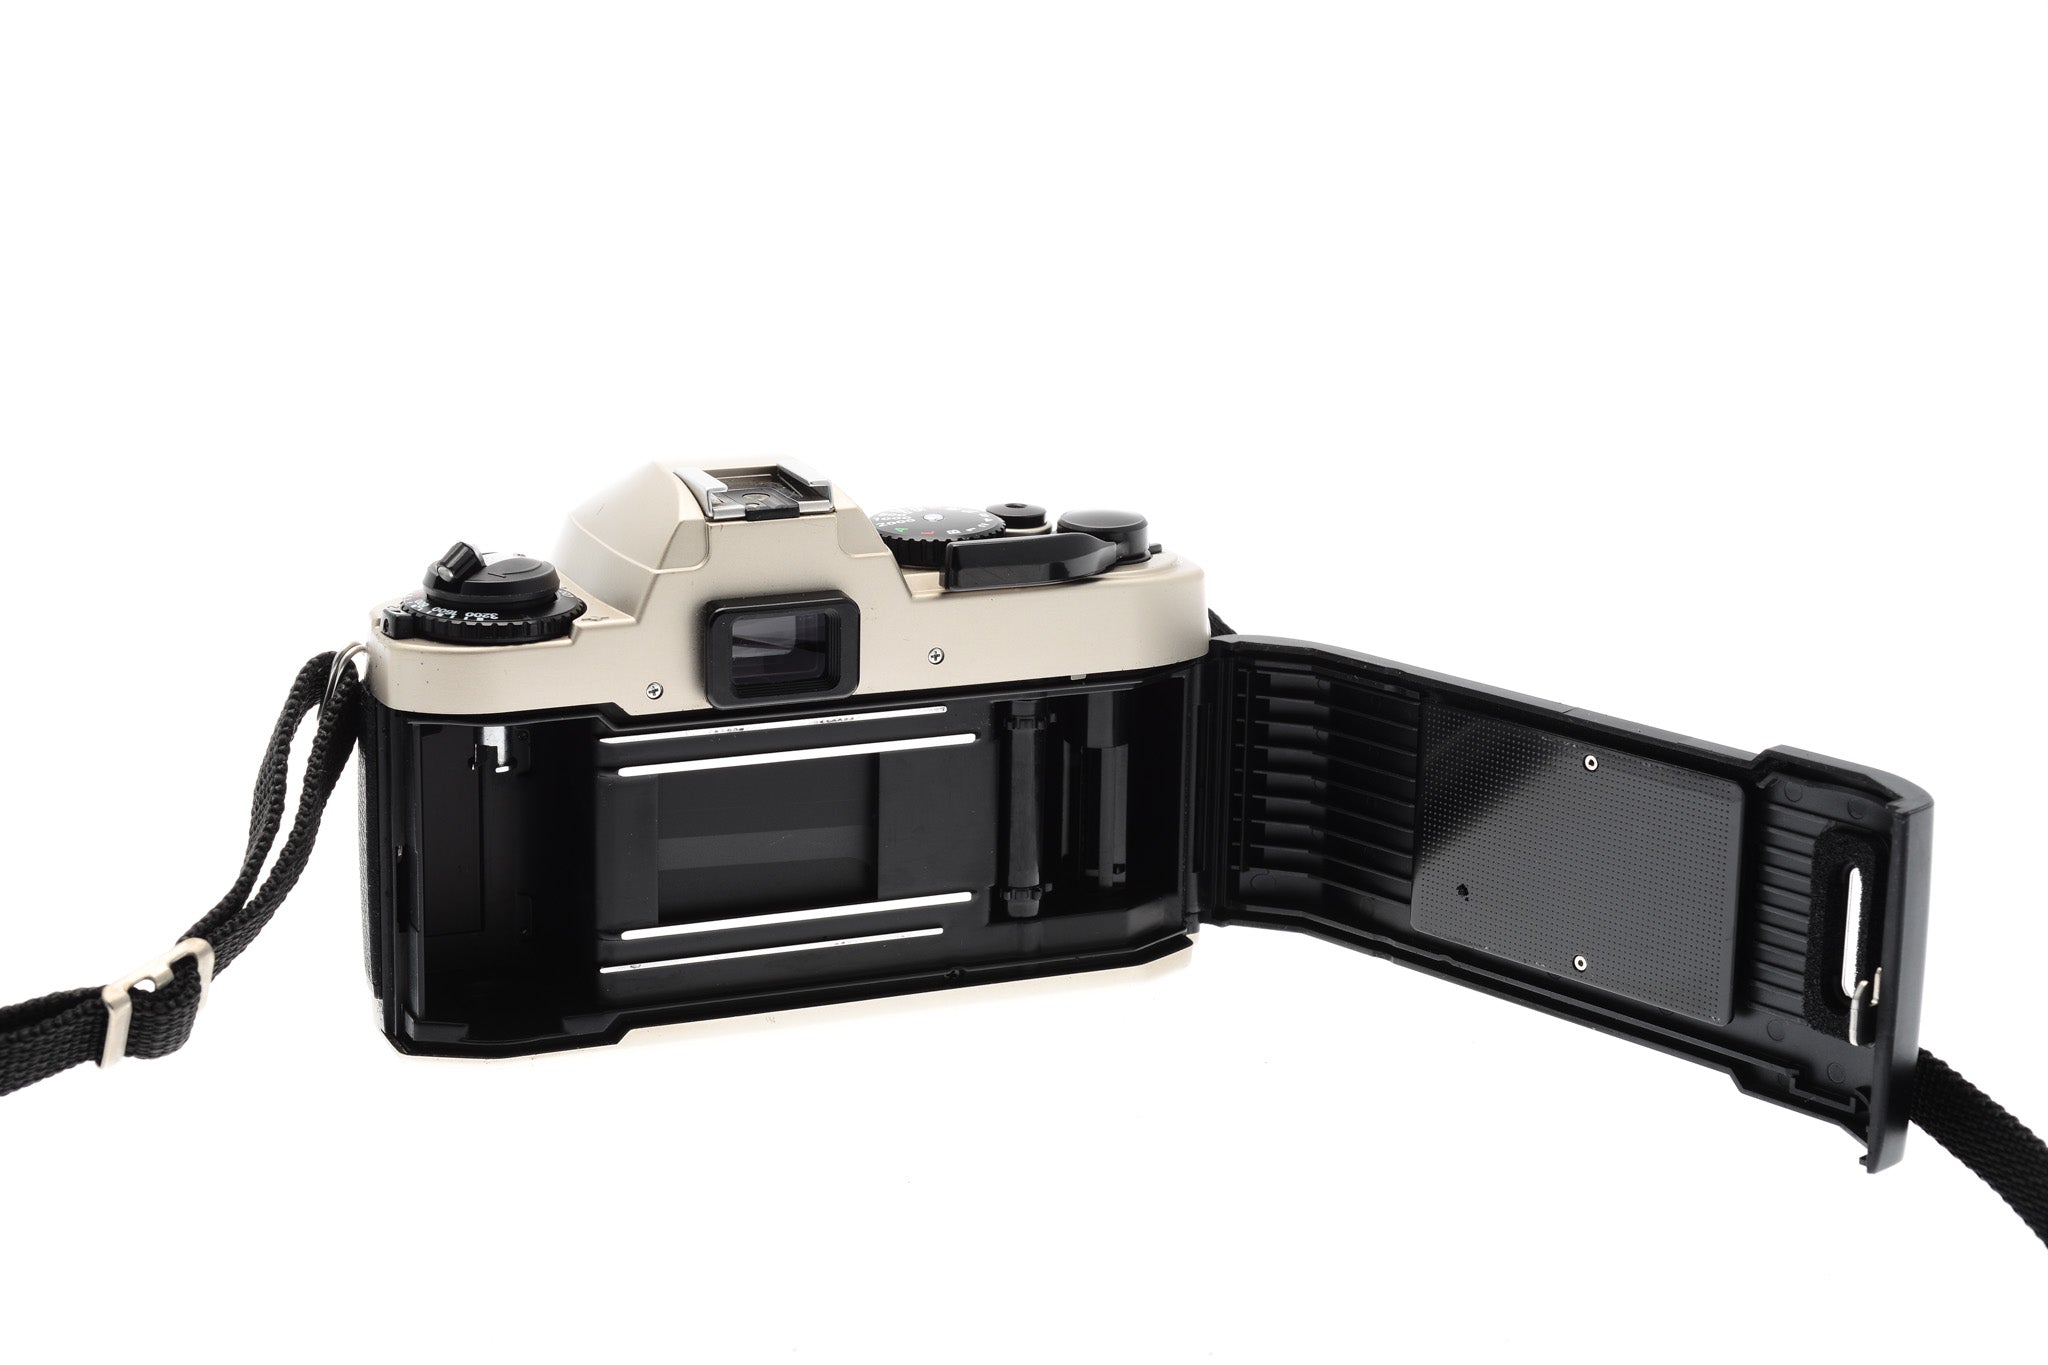 Nikon FE10 - 35mm Film Camera Body - with 6 month warranty